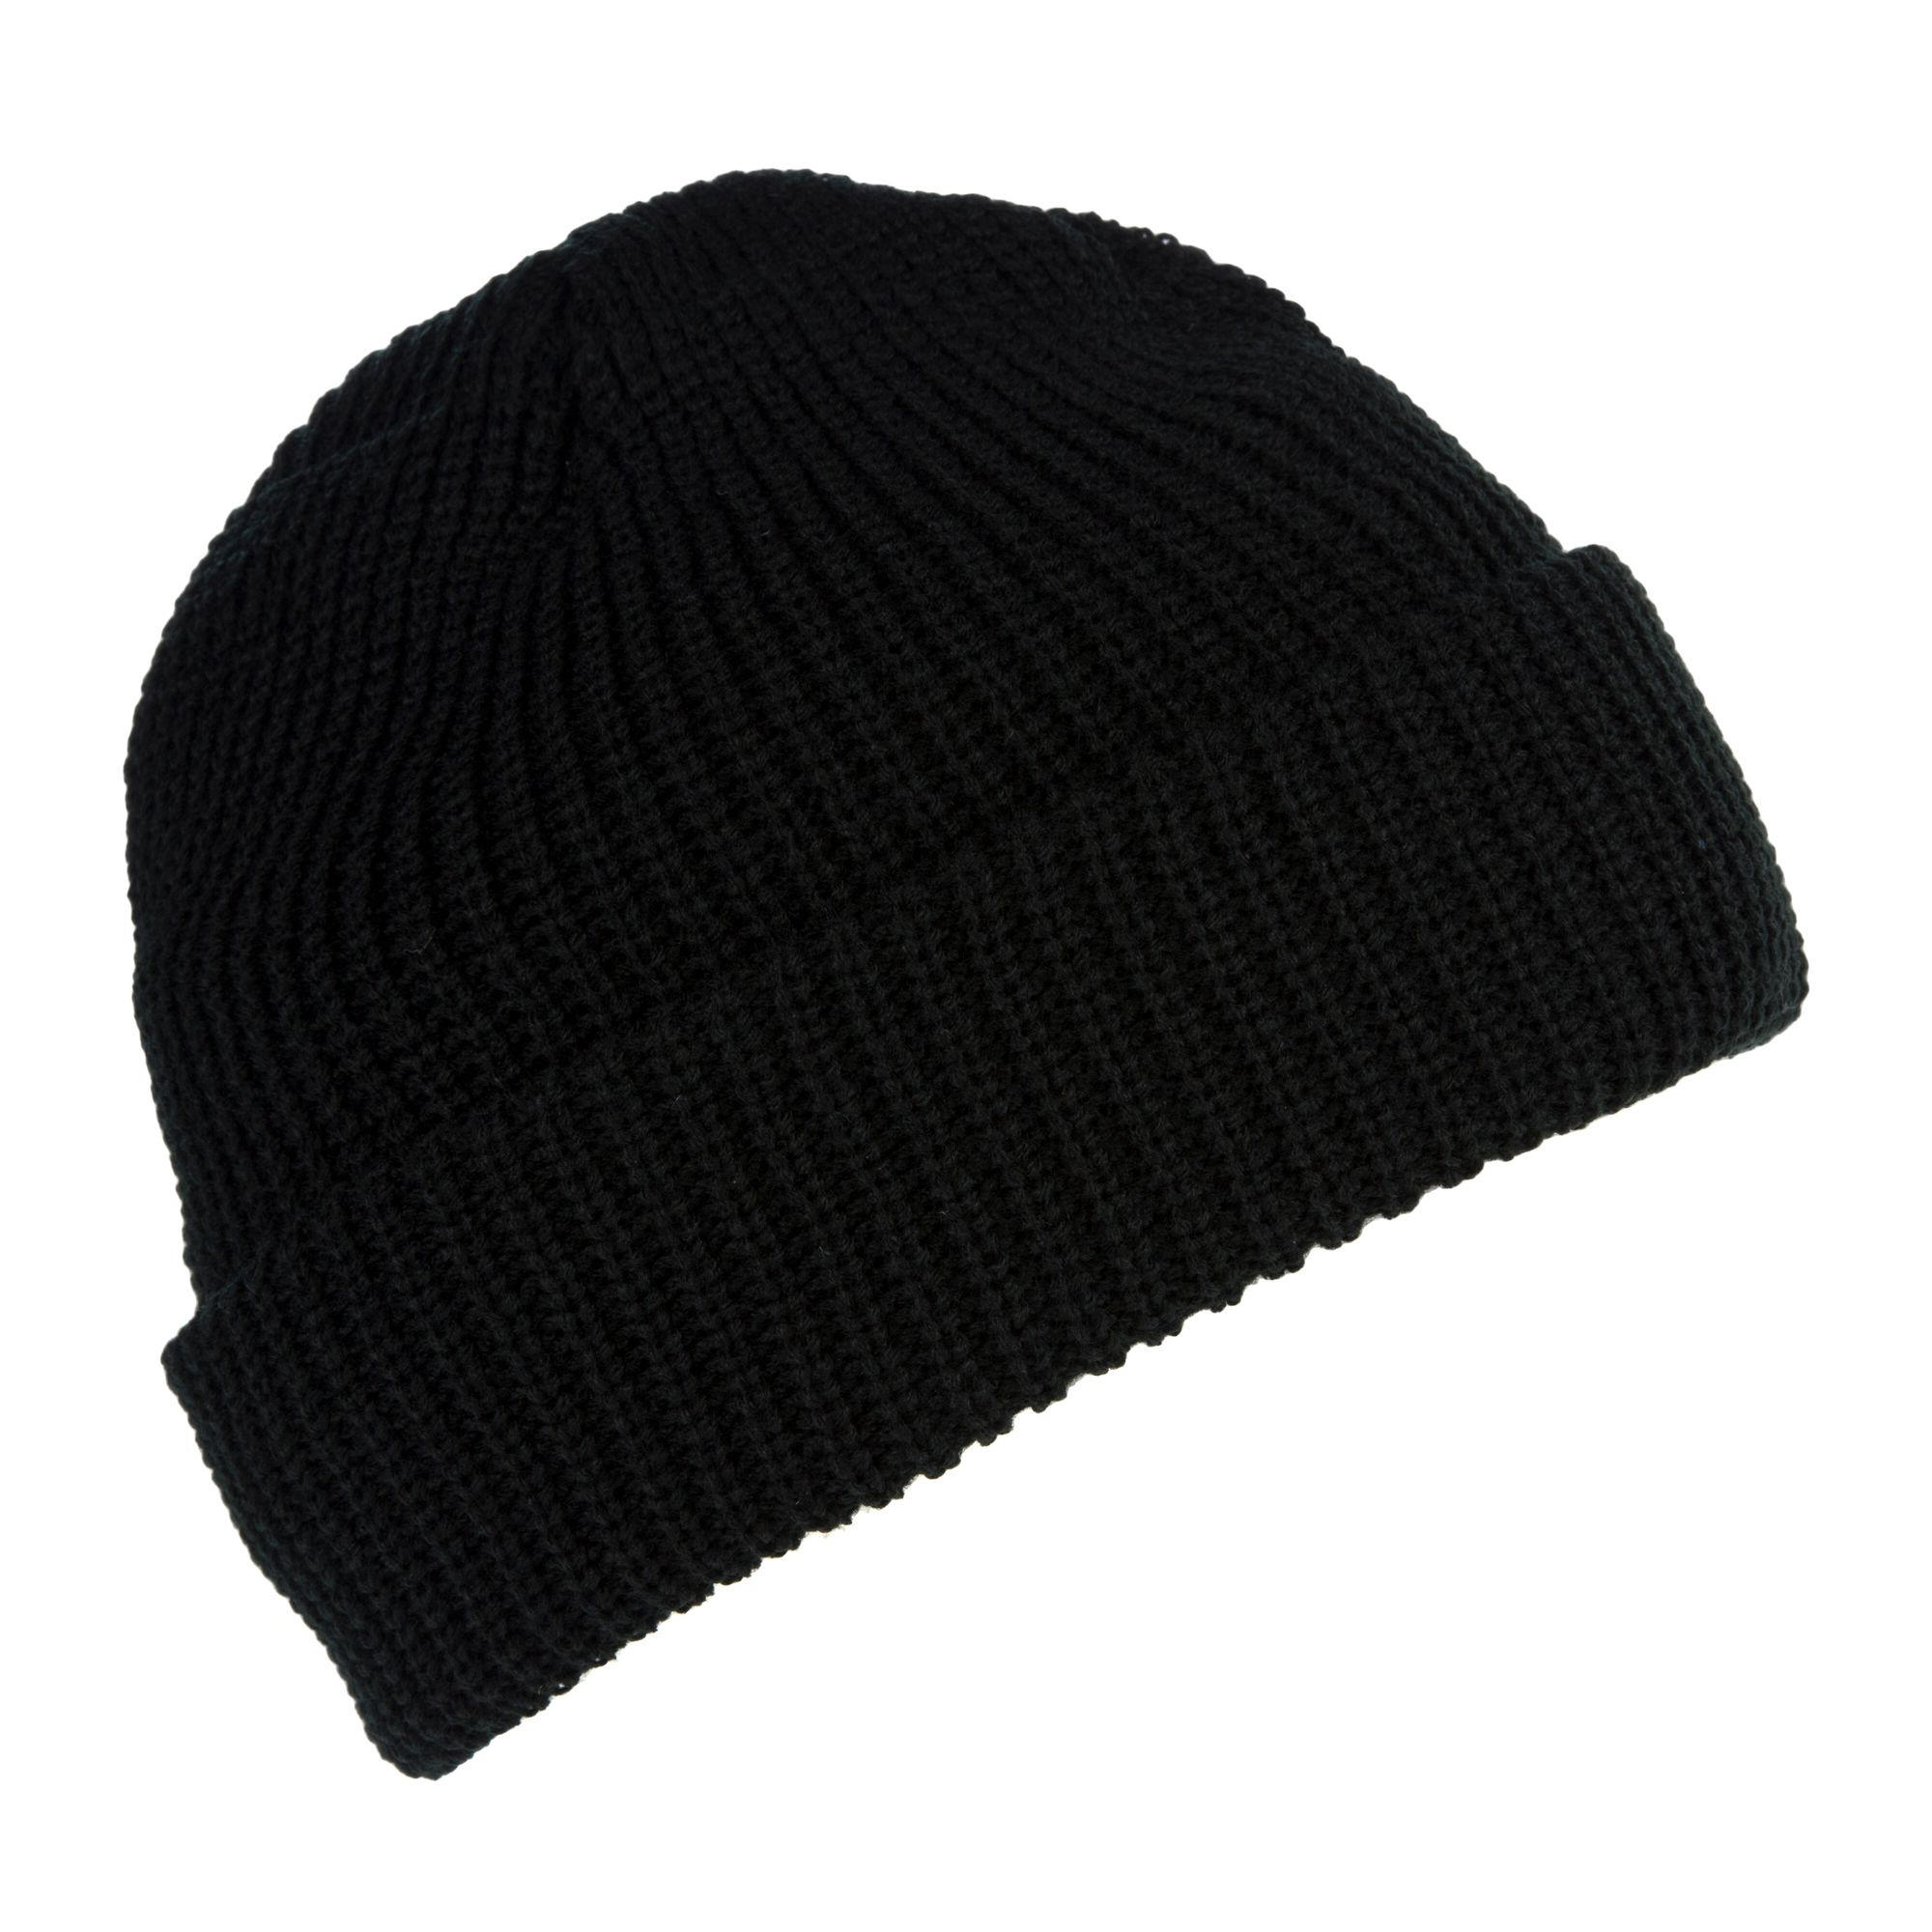 Unisex Fully Ribbed Winter Watch Cap / Hat (Black) 2/4